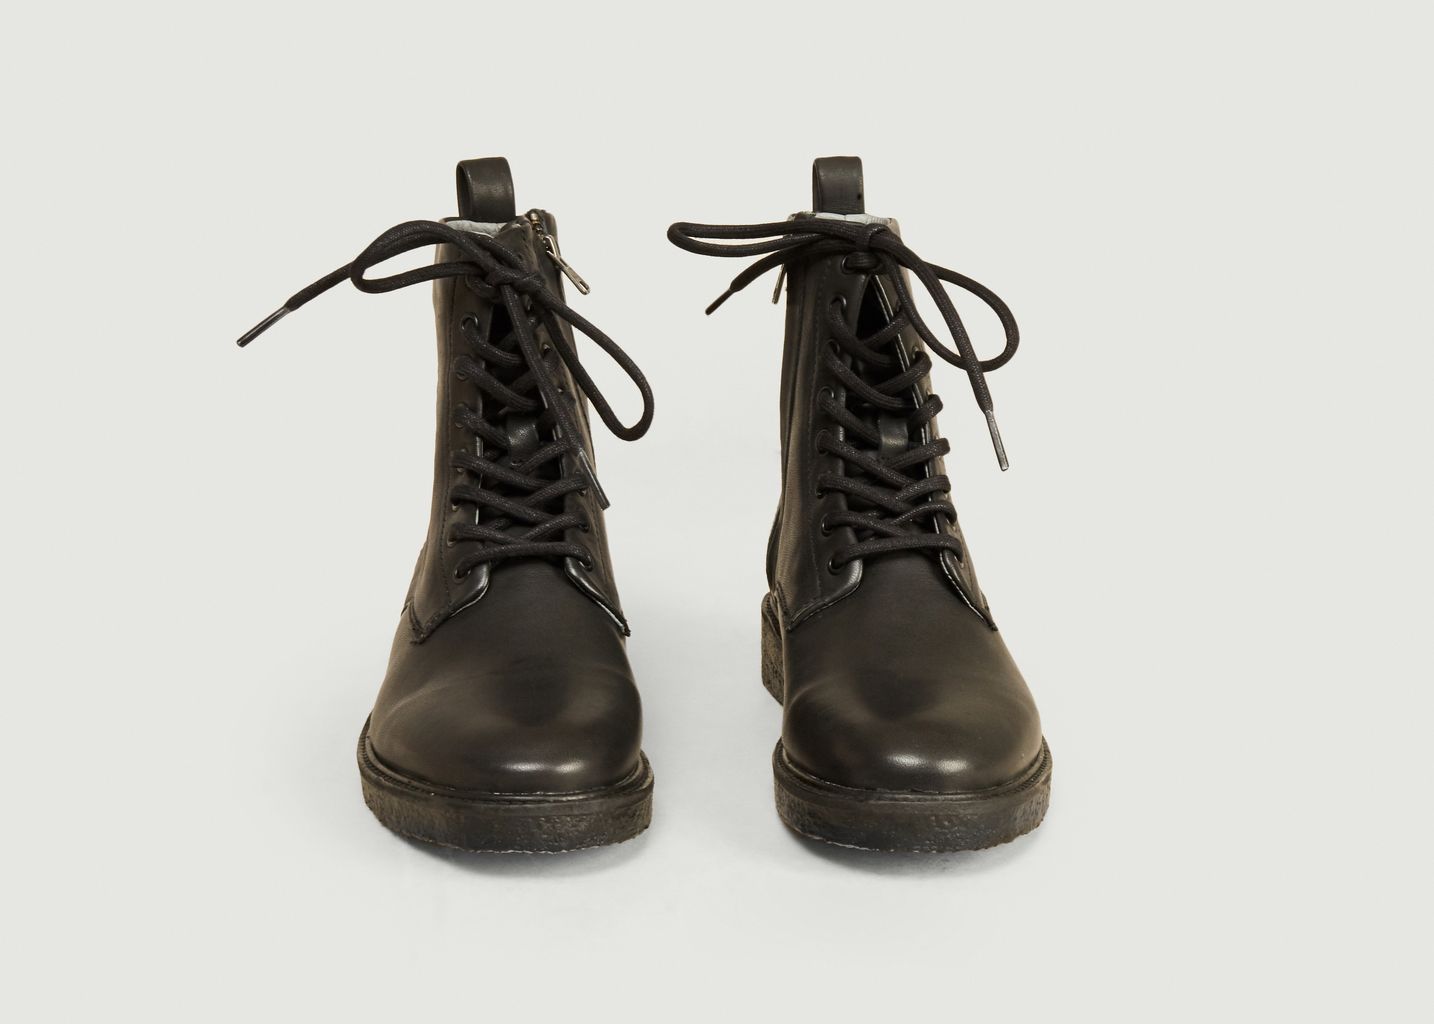 QL56 boots - Blackstone